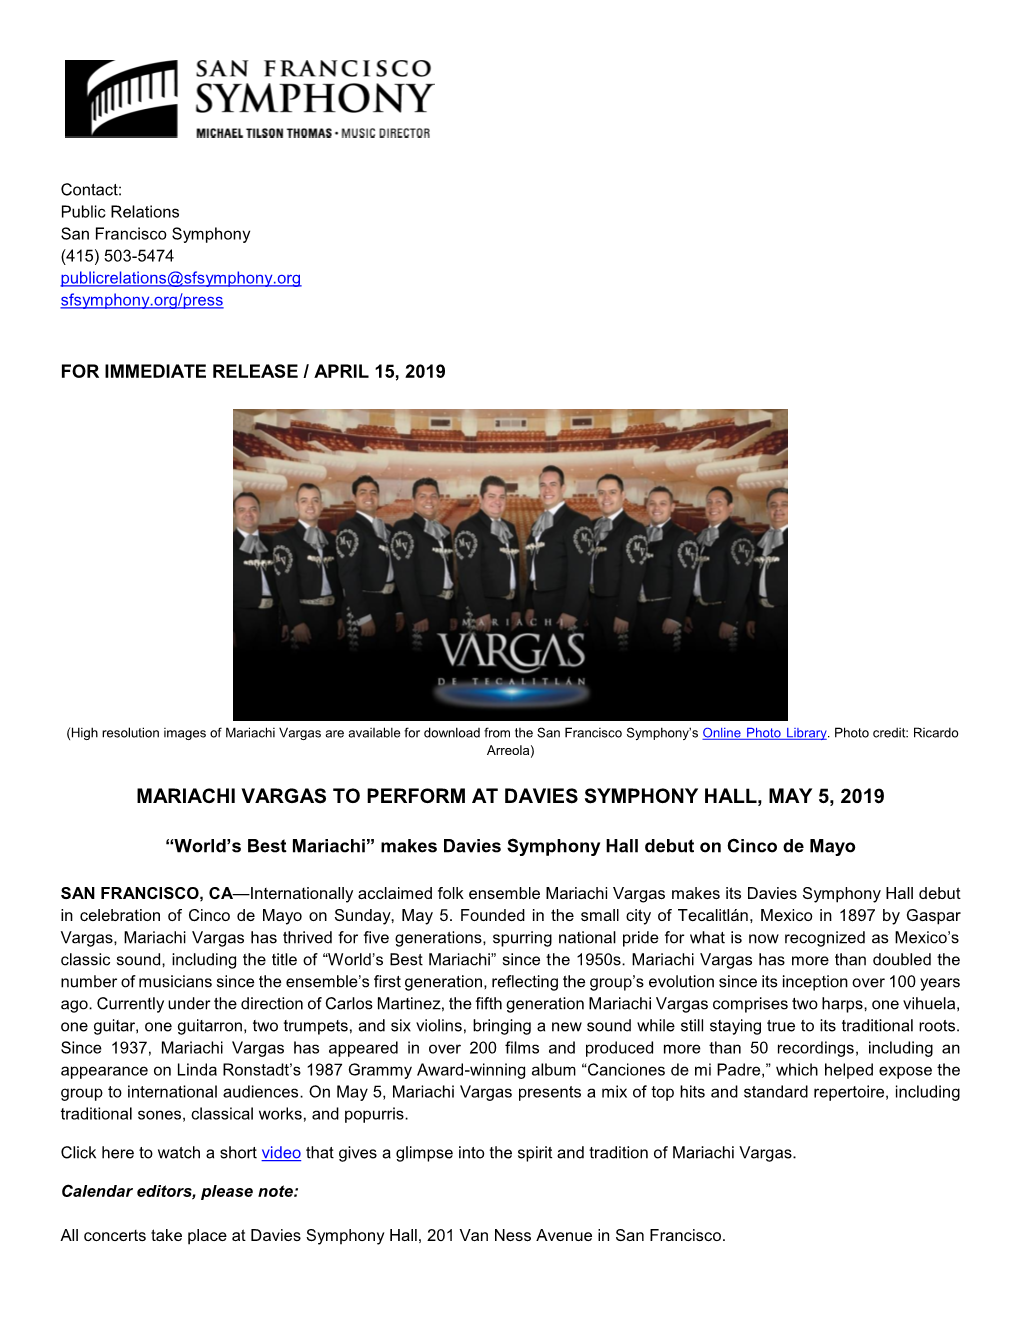 Mariachi Vargas to Perform at Davies Symphony Hall, May 5, 2019